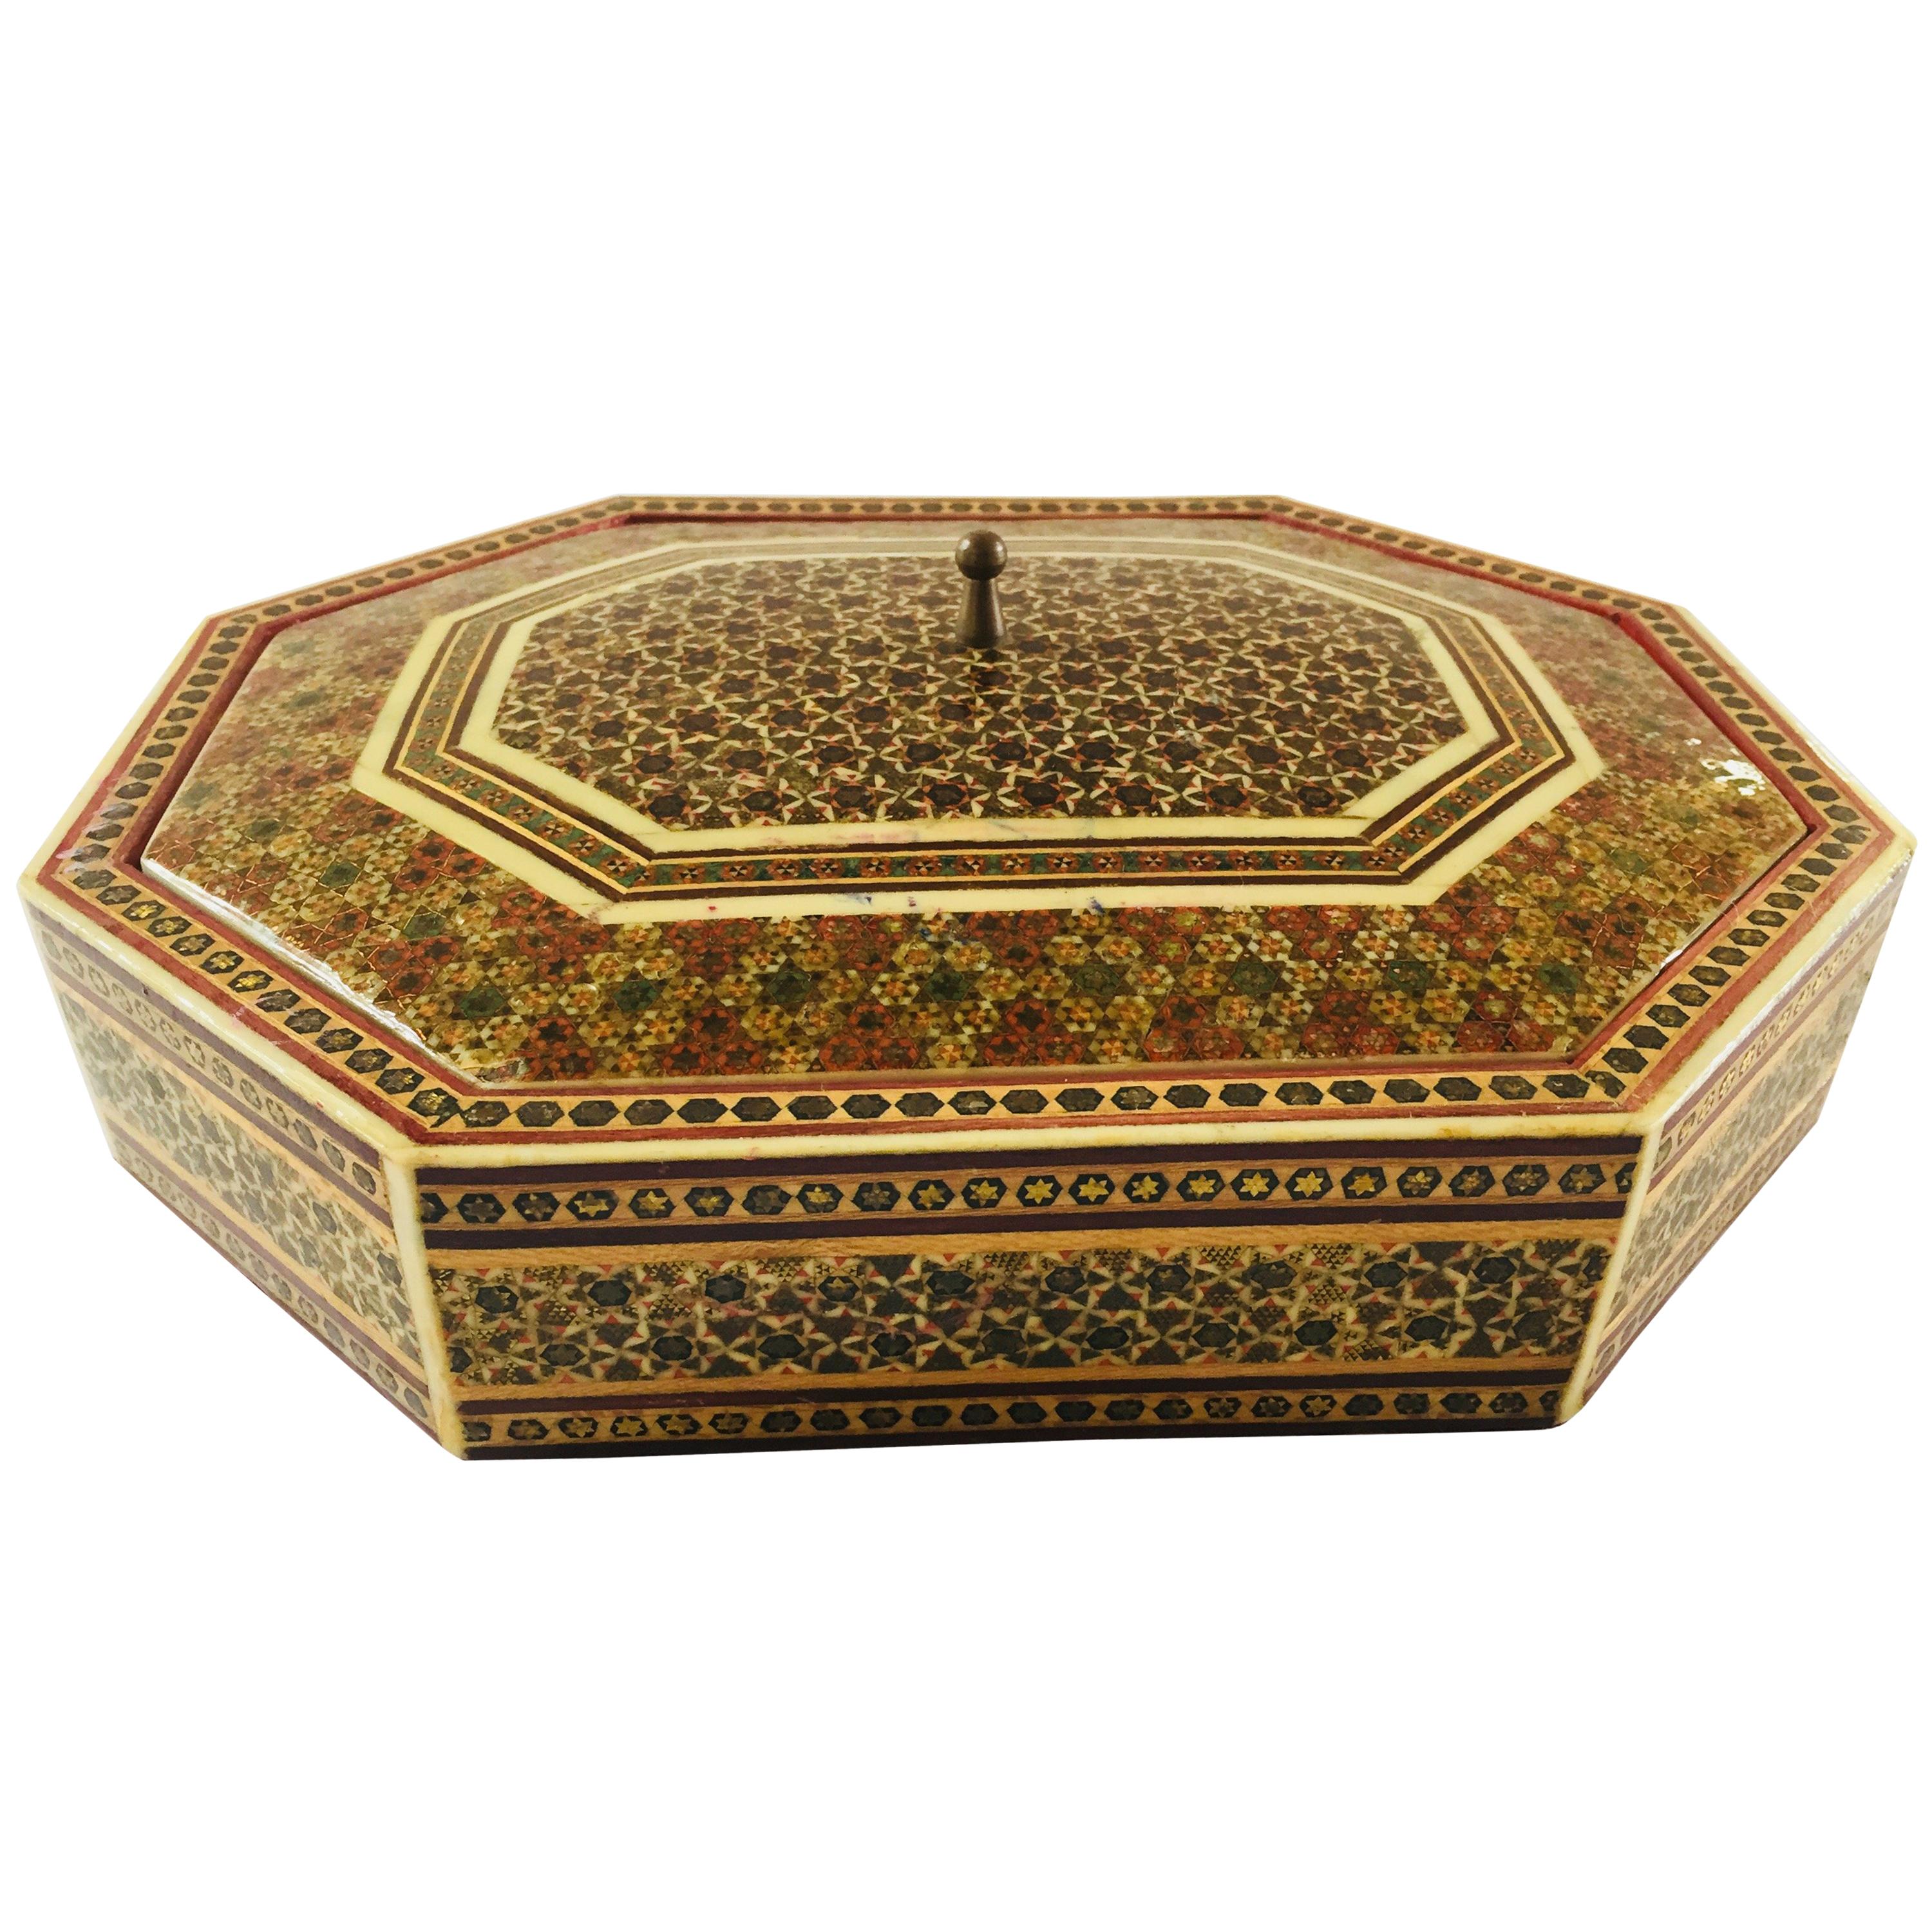 Anglo-Persian Octagonal Mosaic Khatam Inlaid Box